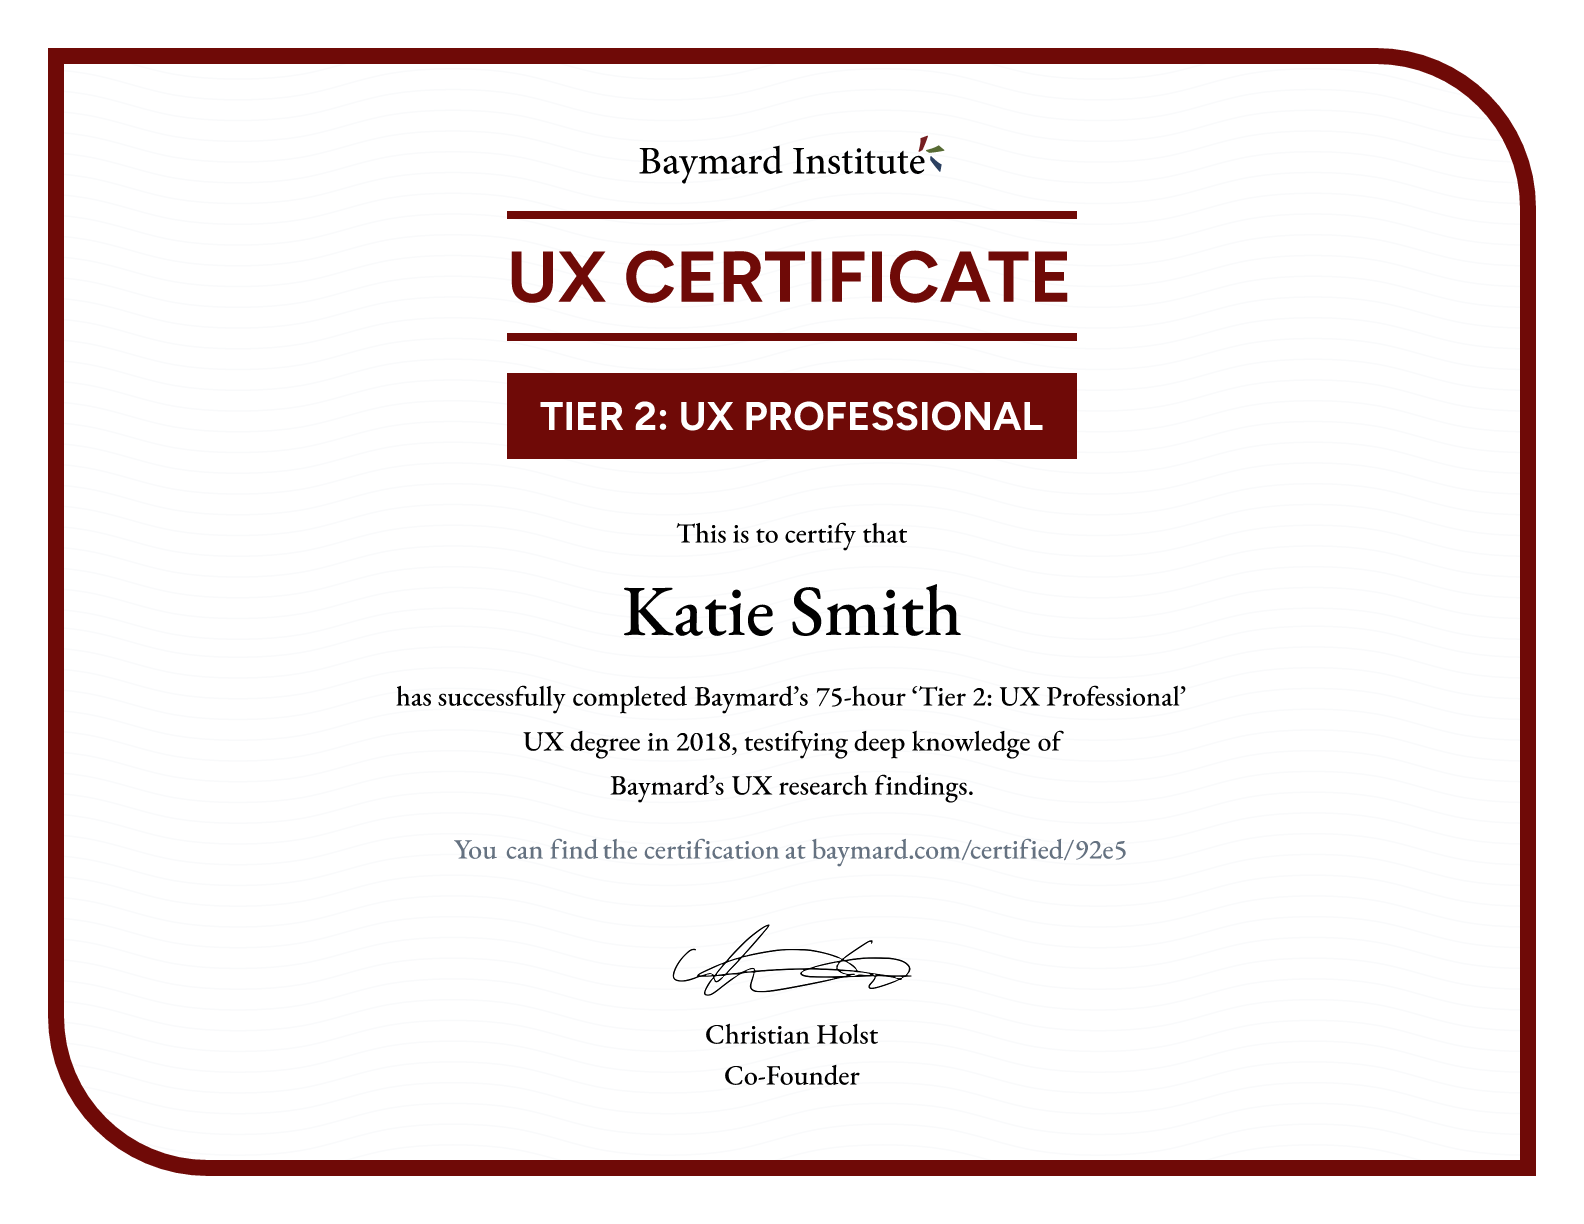 Katie Smith’s certificate